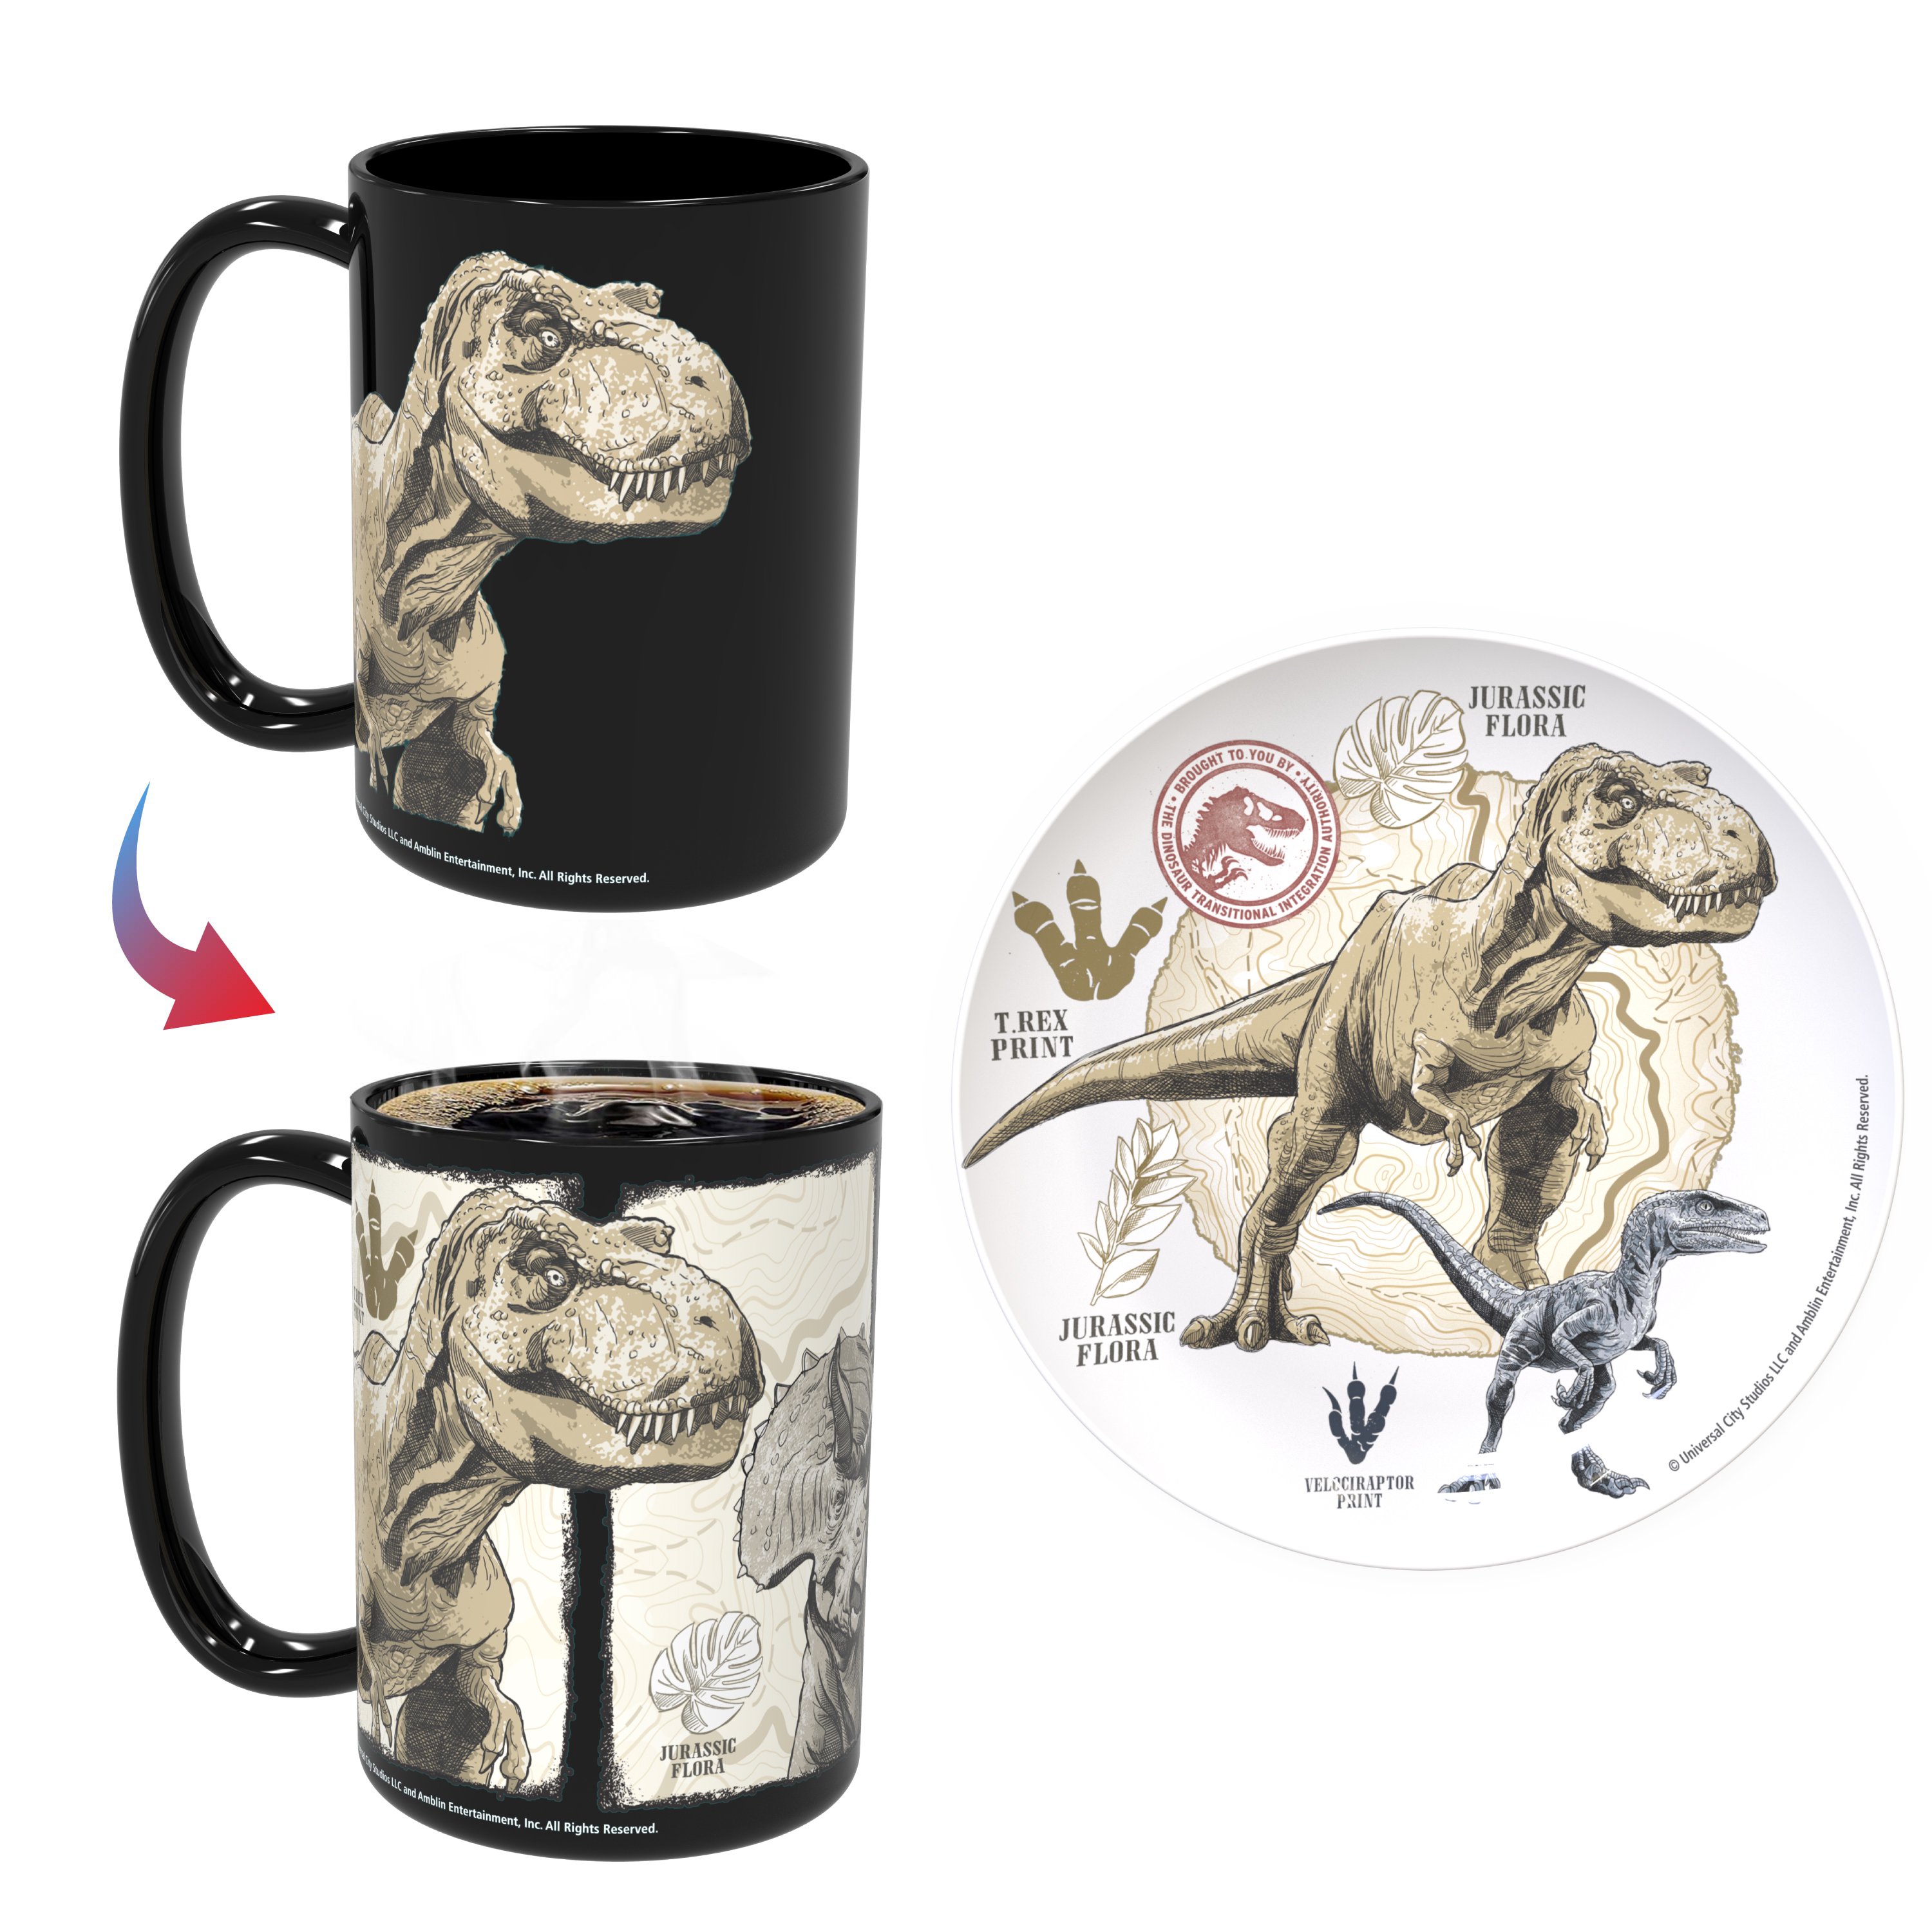 Jurassic World Dominion Ceramic Coffee Mug and Plate, T-Rex, 2-piece set slideshow image 1